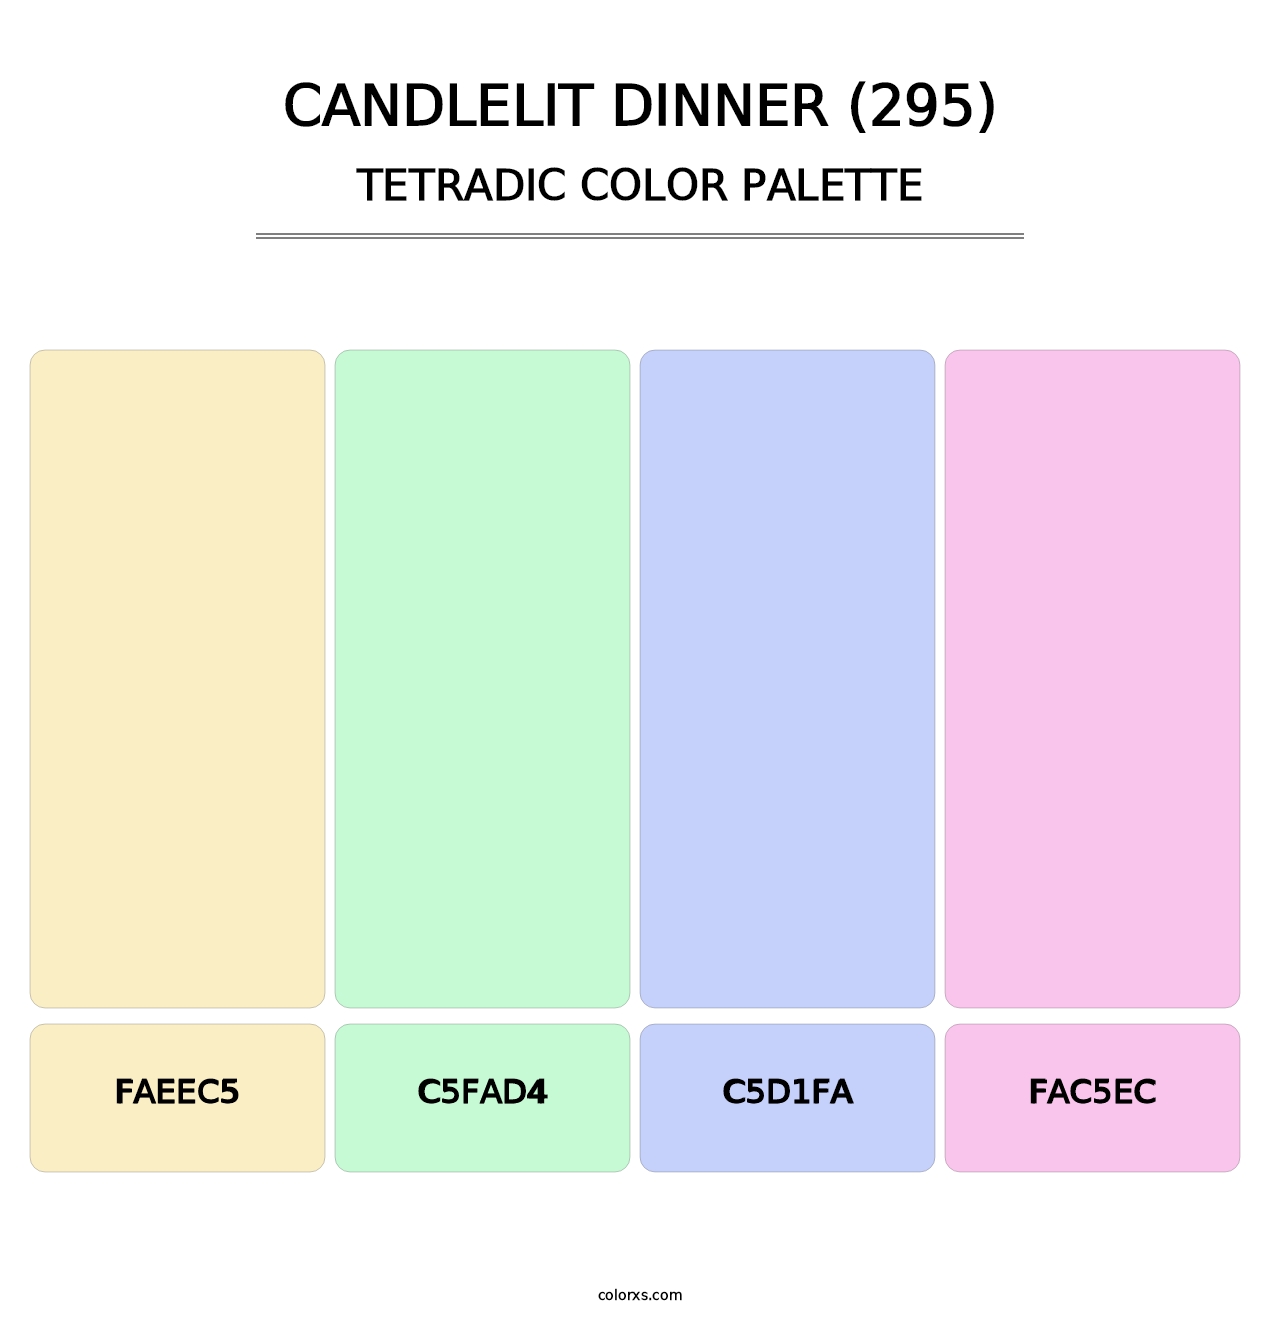 Candlelit Dinner (295) - Tetradic Color Palette